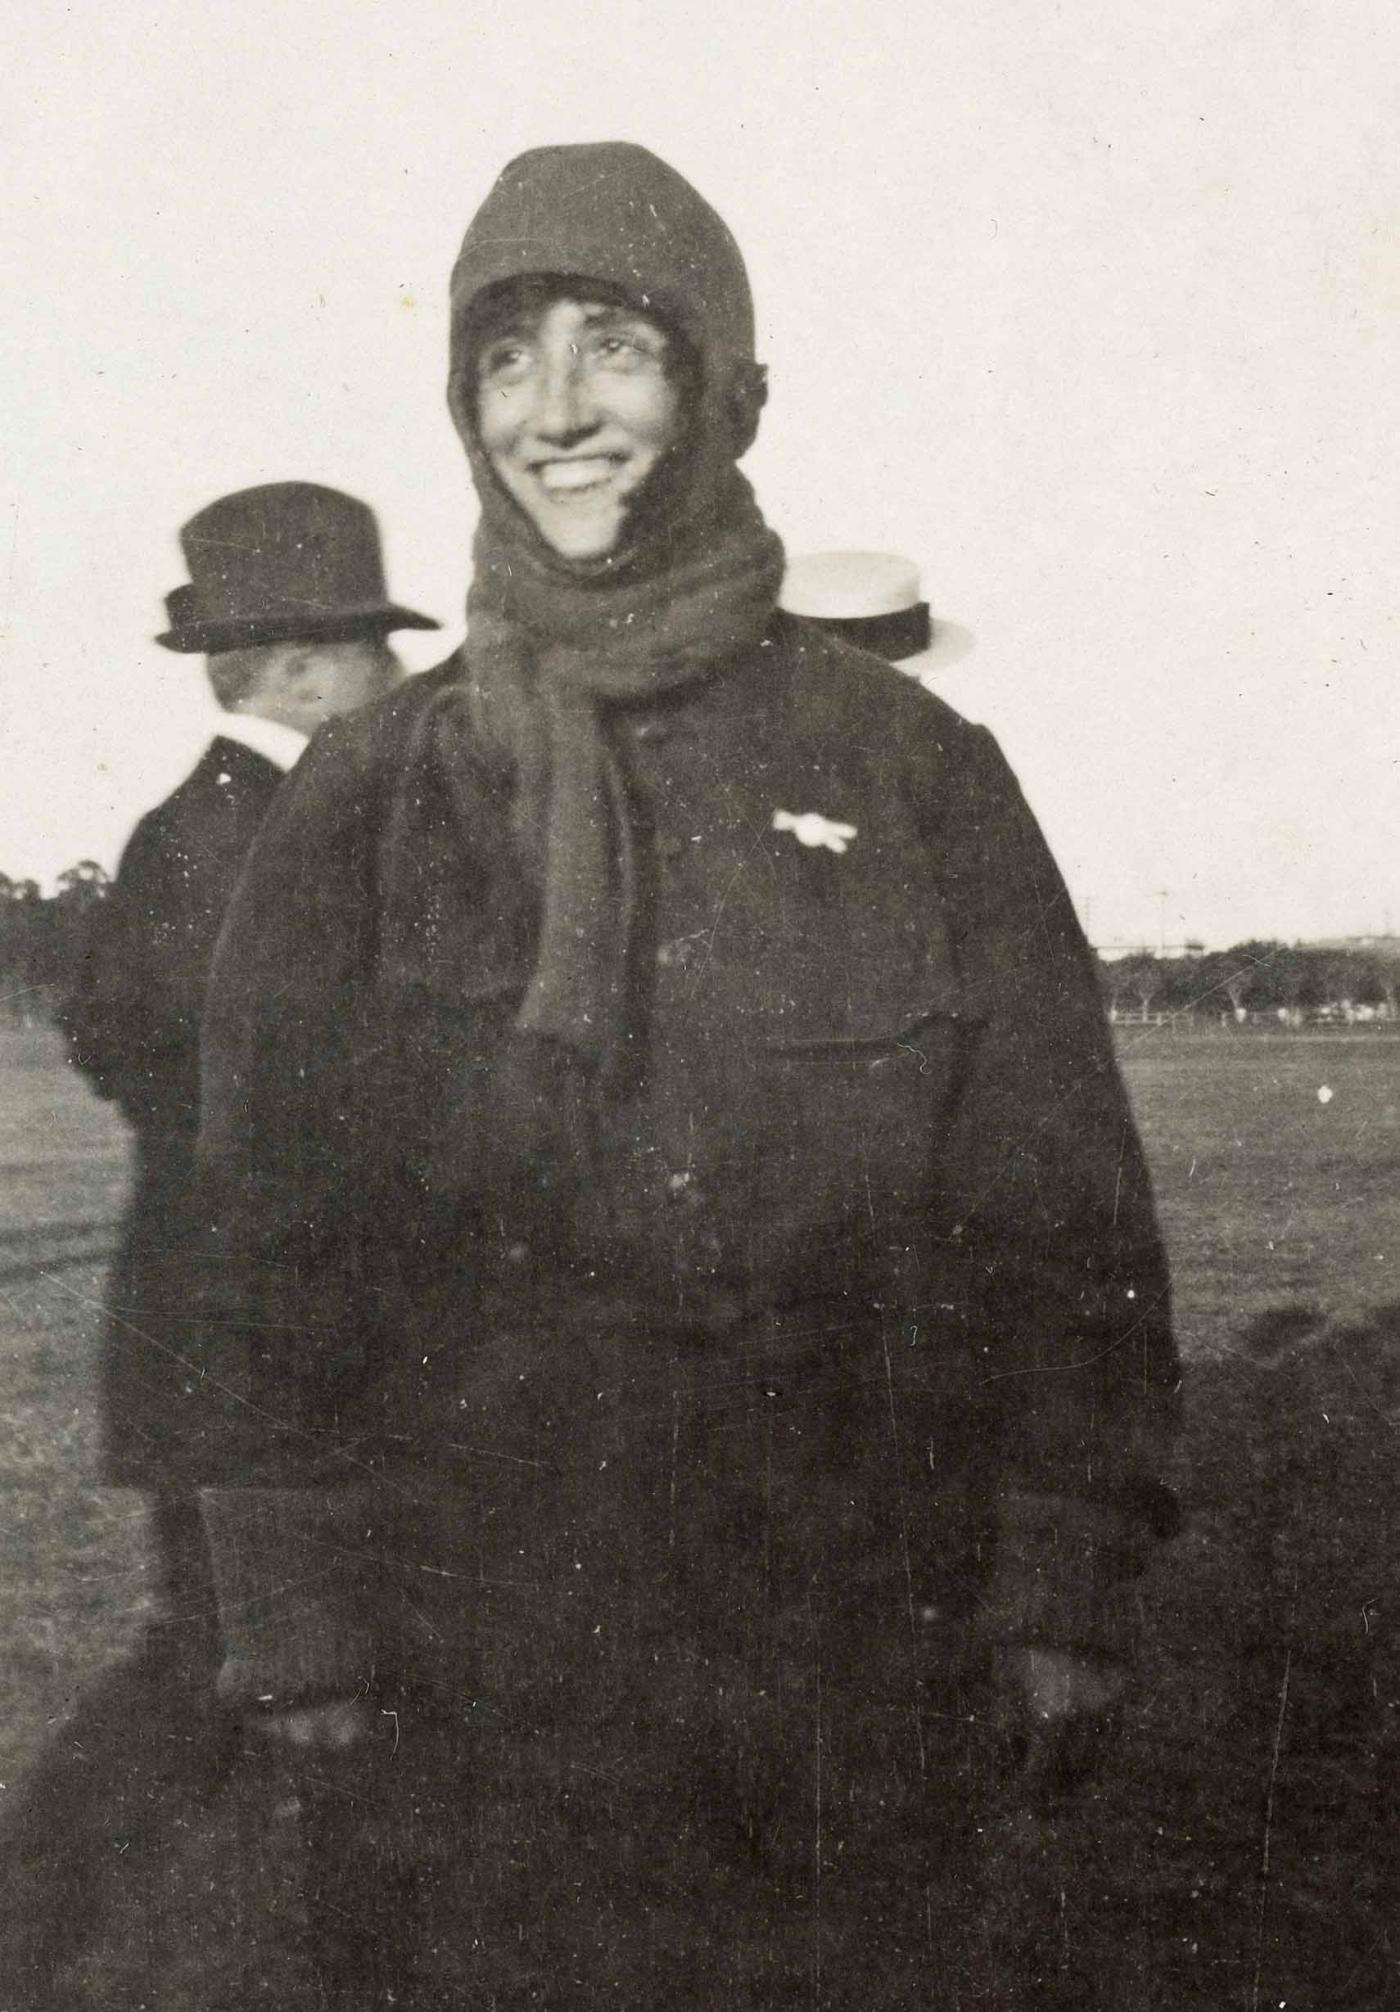 Les 100 ans d'Adrienne Bolland, aviatrice loirétaine d’exception ! Adrienne Bolland en avril 1921